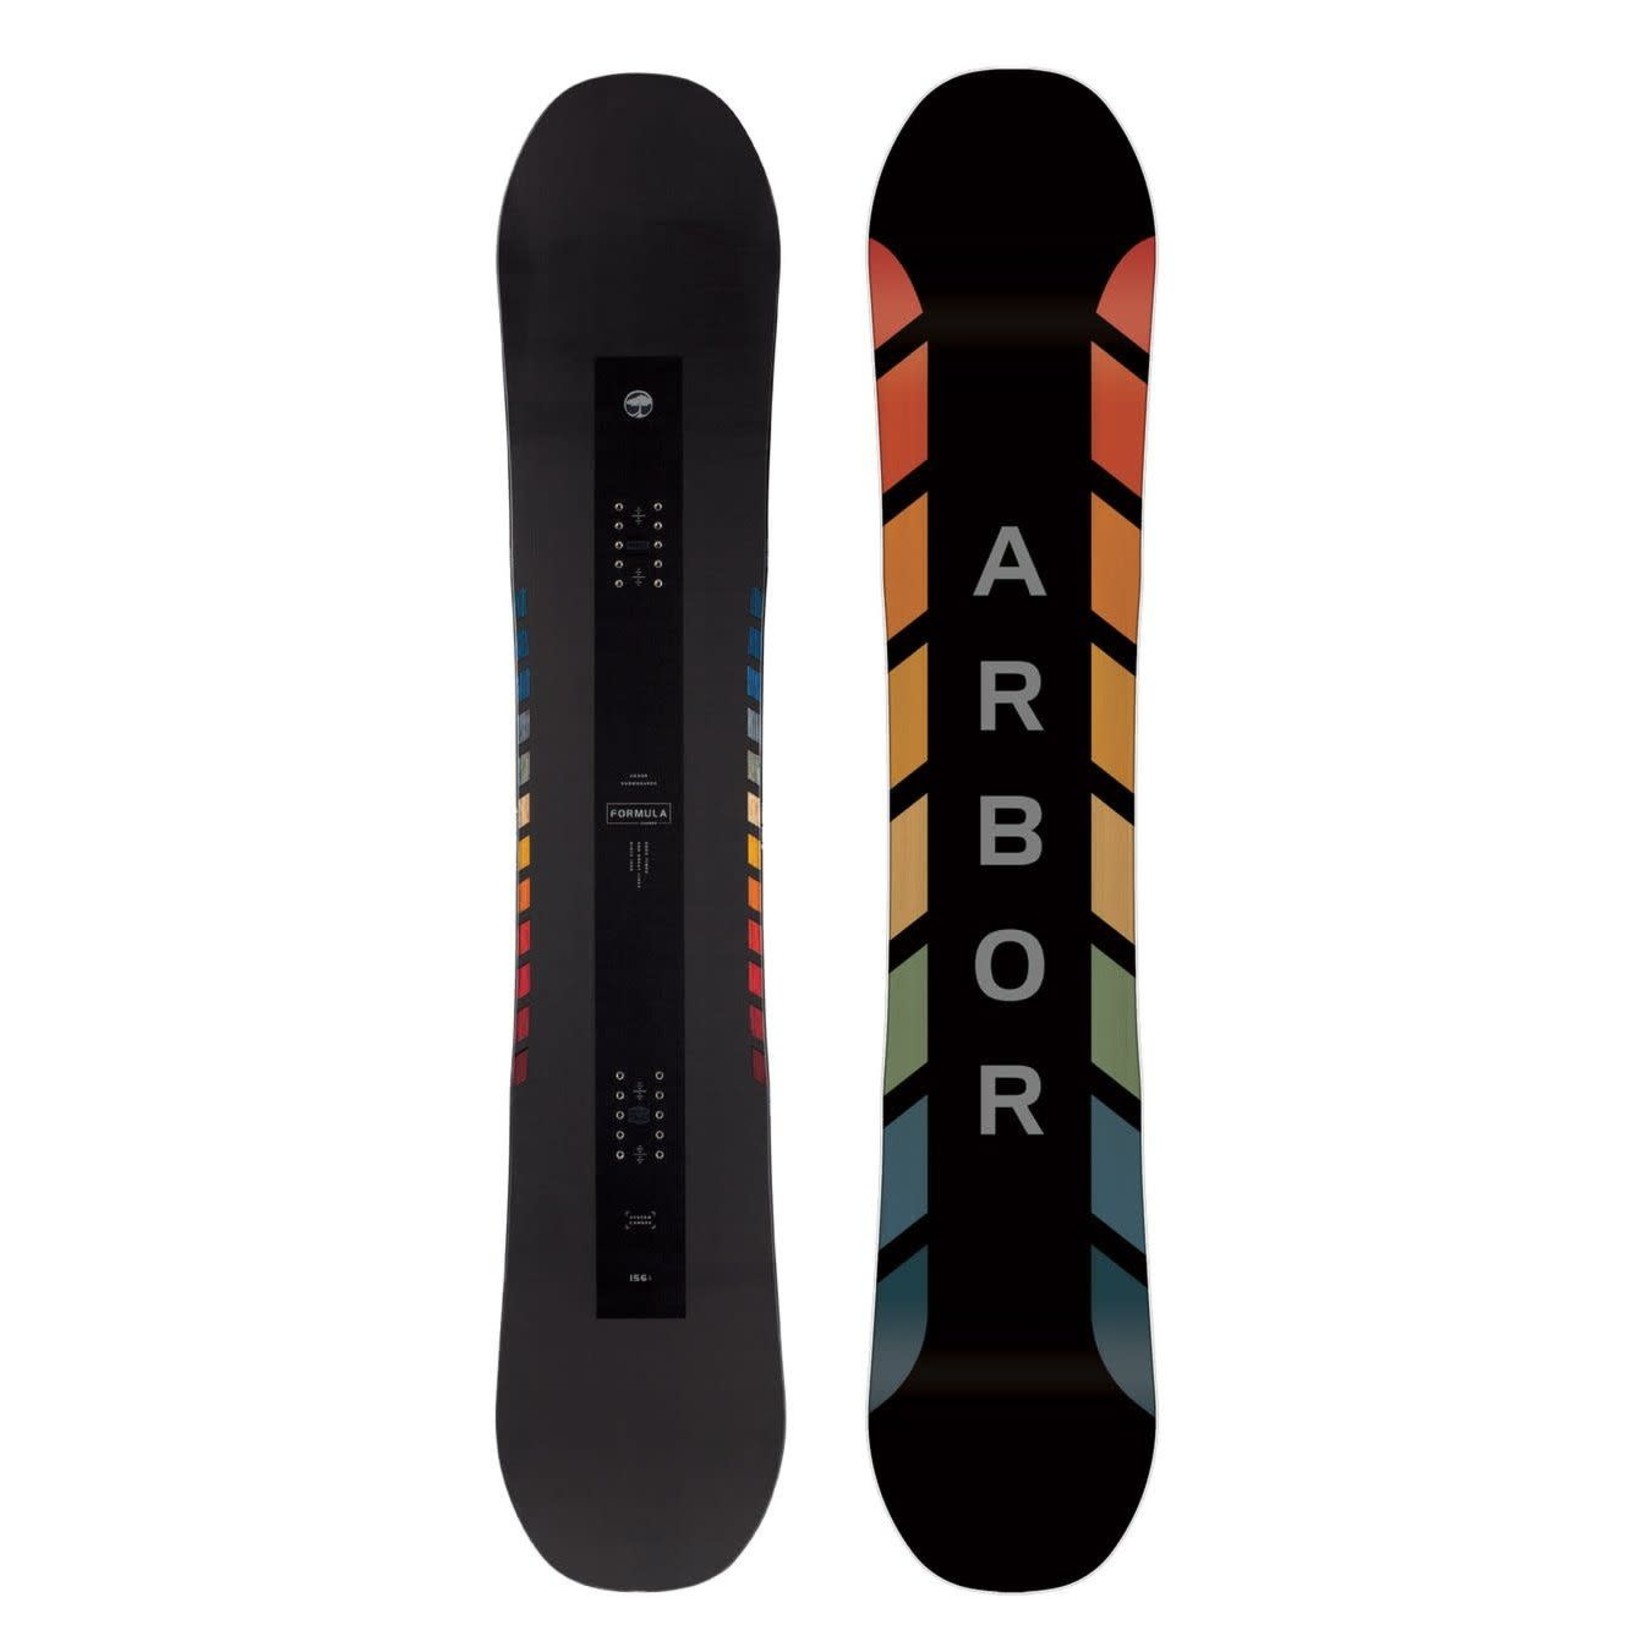 2021 Arbor Formula Rocker Snowboard Attic Skate & Snow Shop